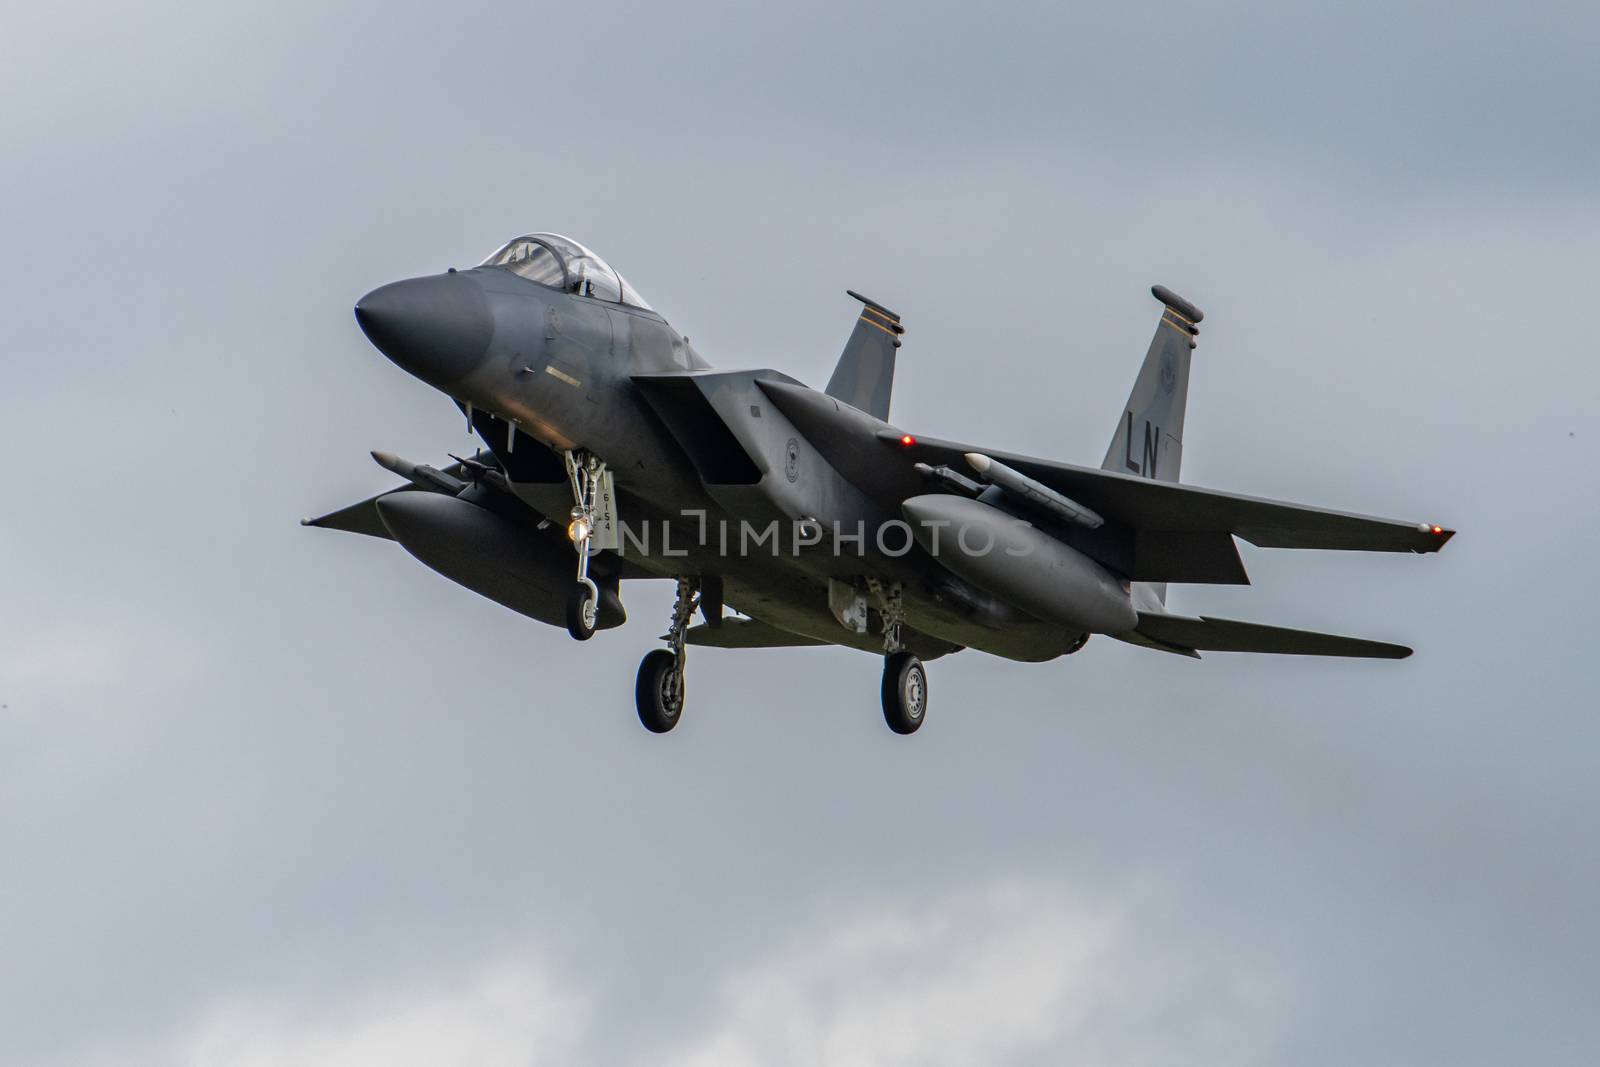 Boeing F-15 fighter jet landing at RAF Lakenheath in England